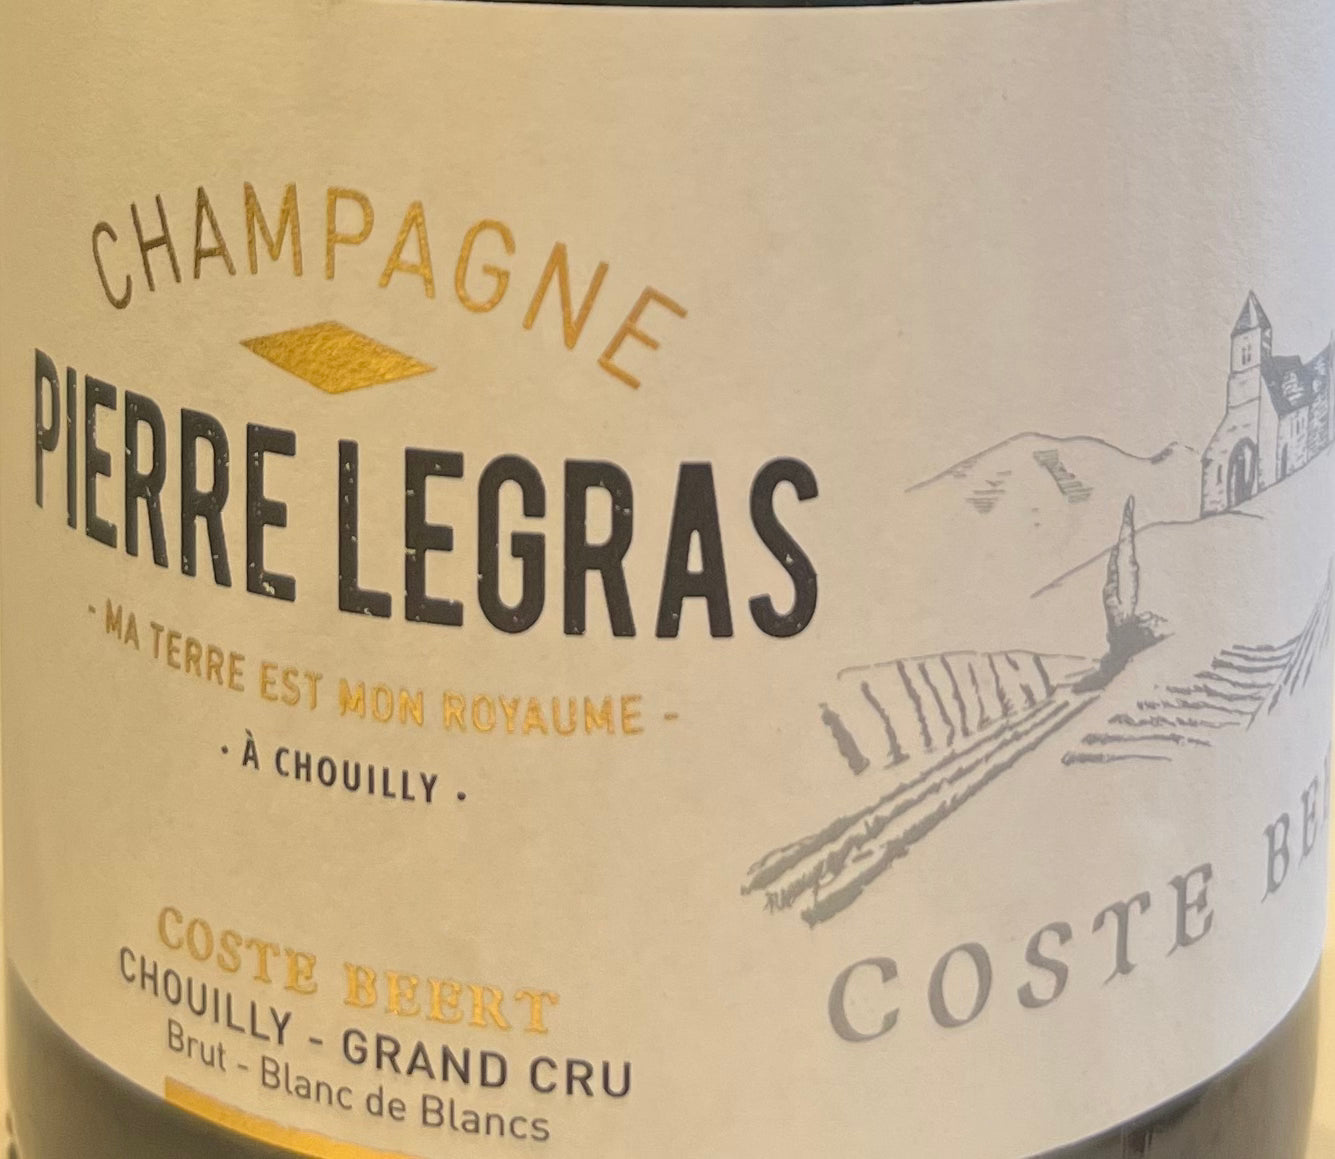 Pierre Legras 'Coste Beert' - Blanc de Blancs - Grand Cru Chouilly - Champagne